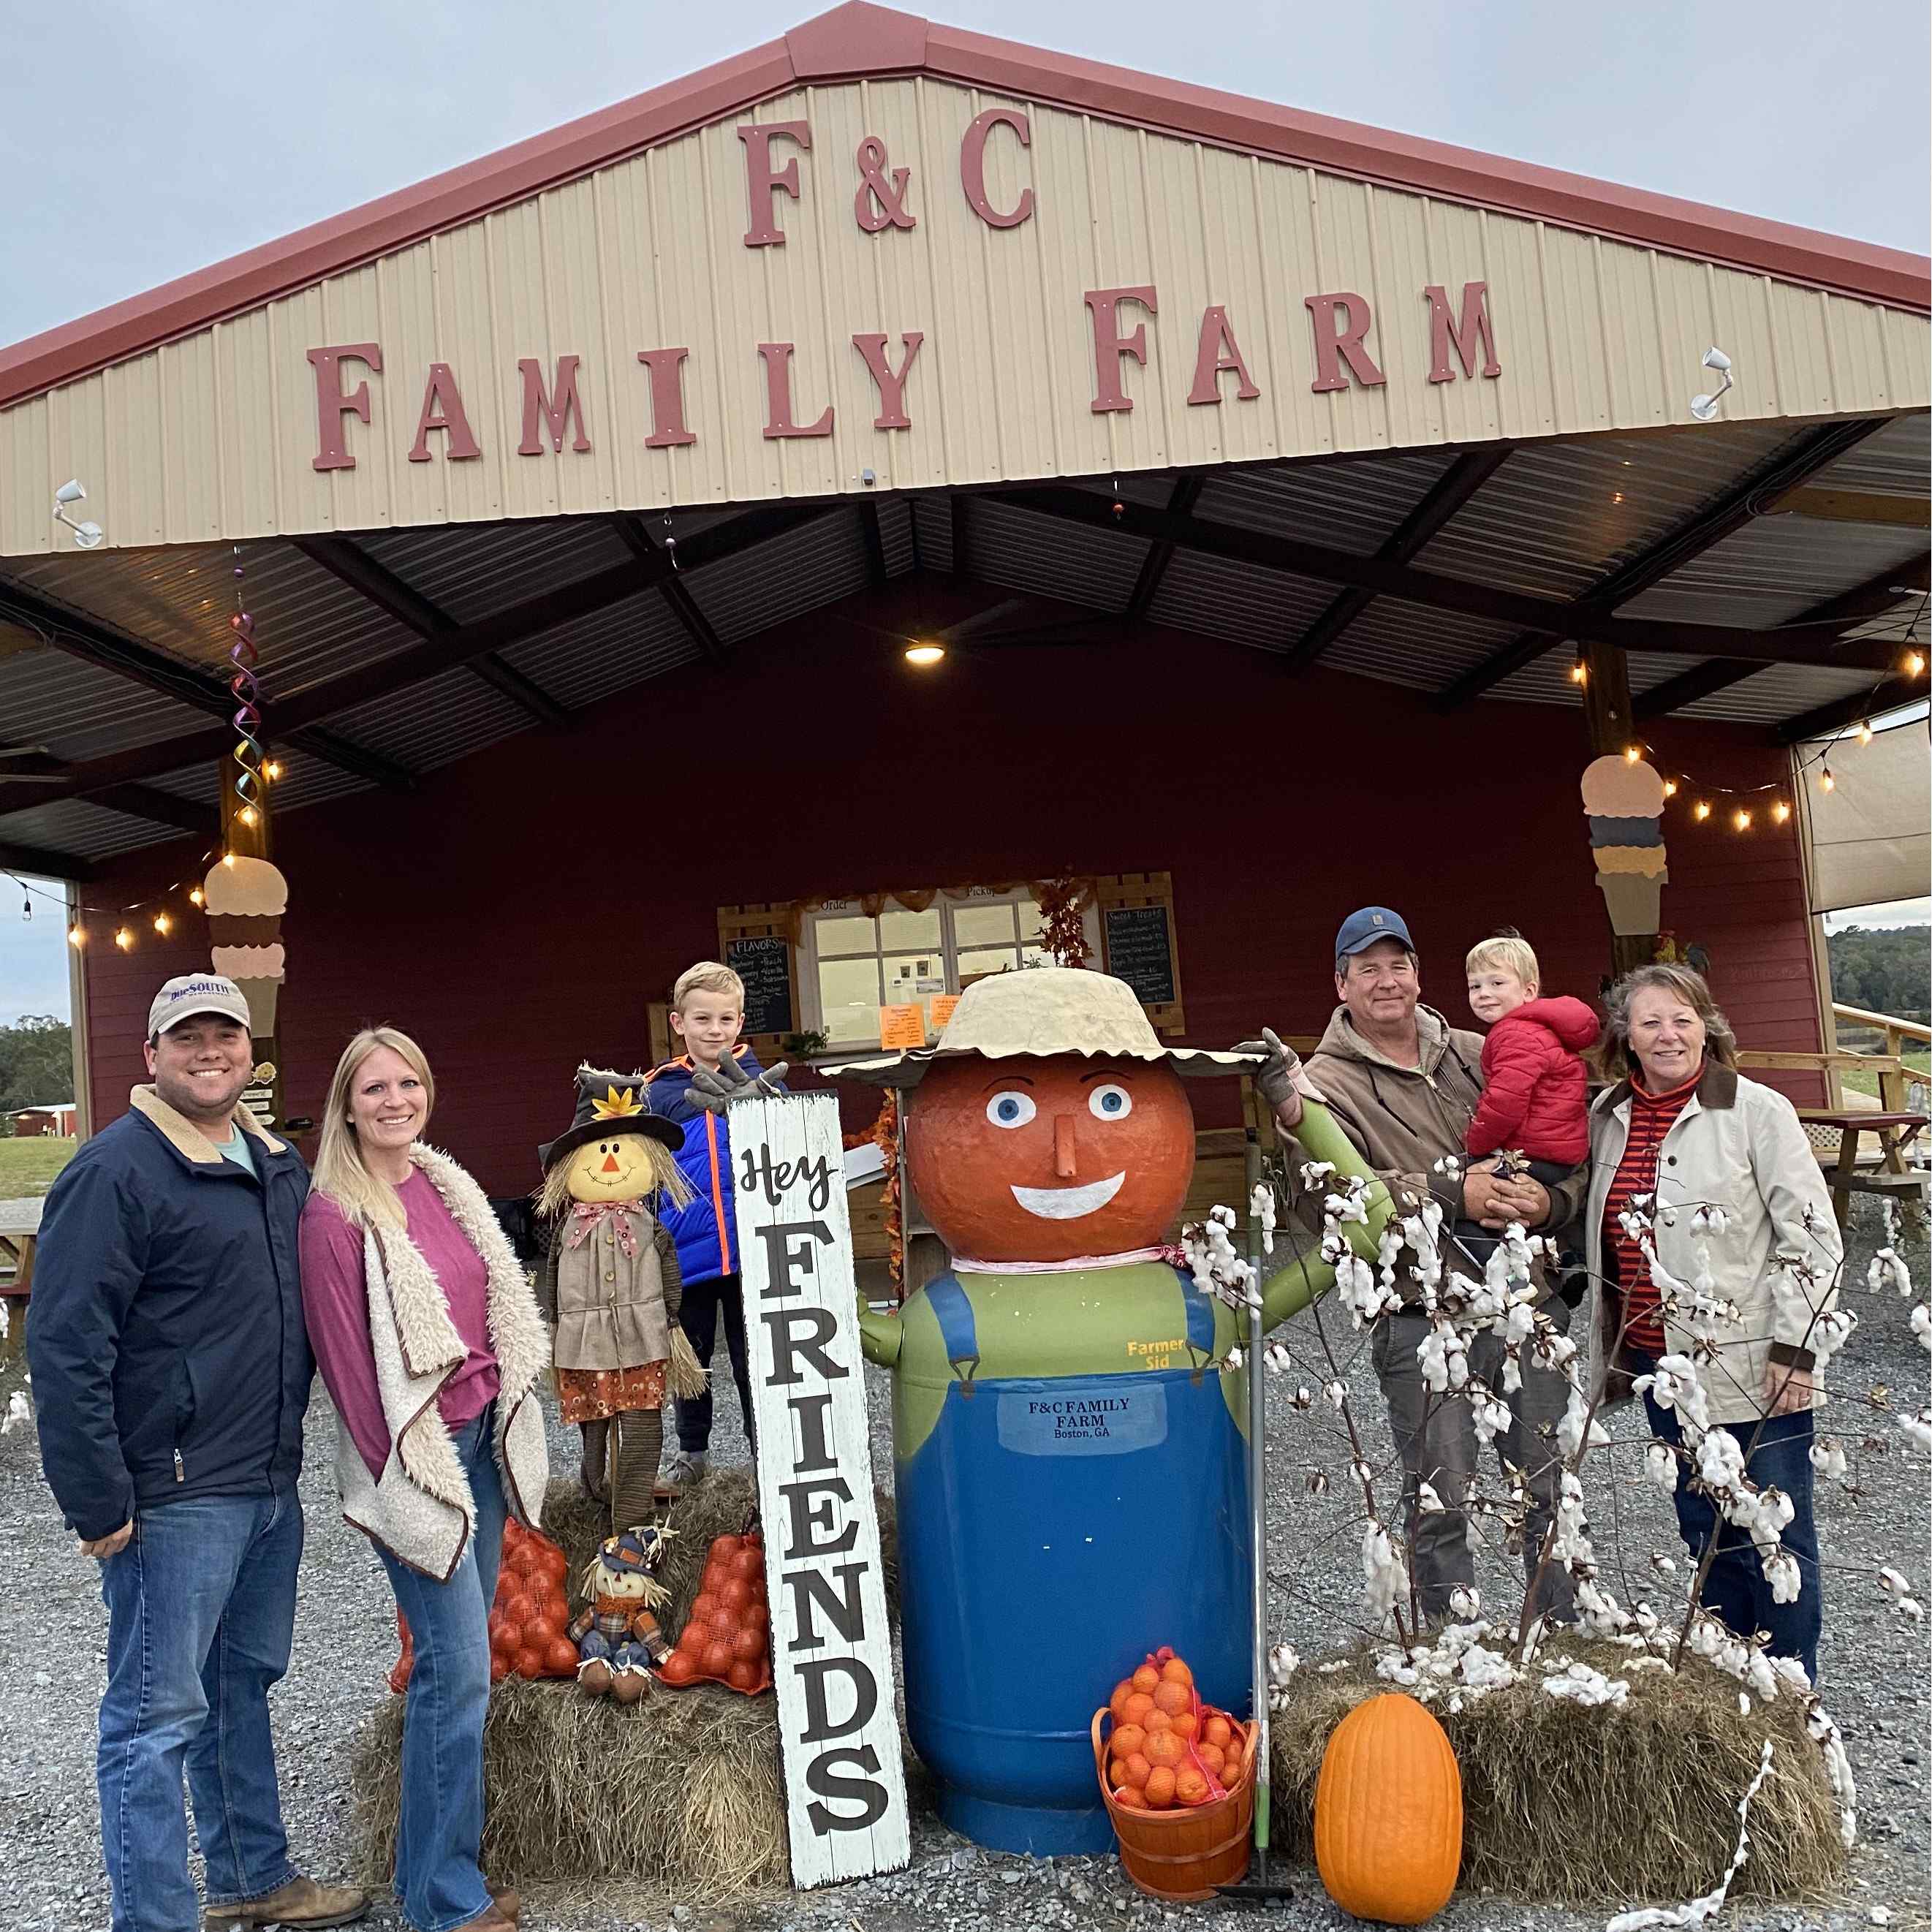 F & C Family Farm